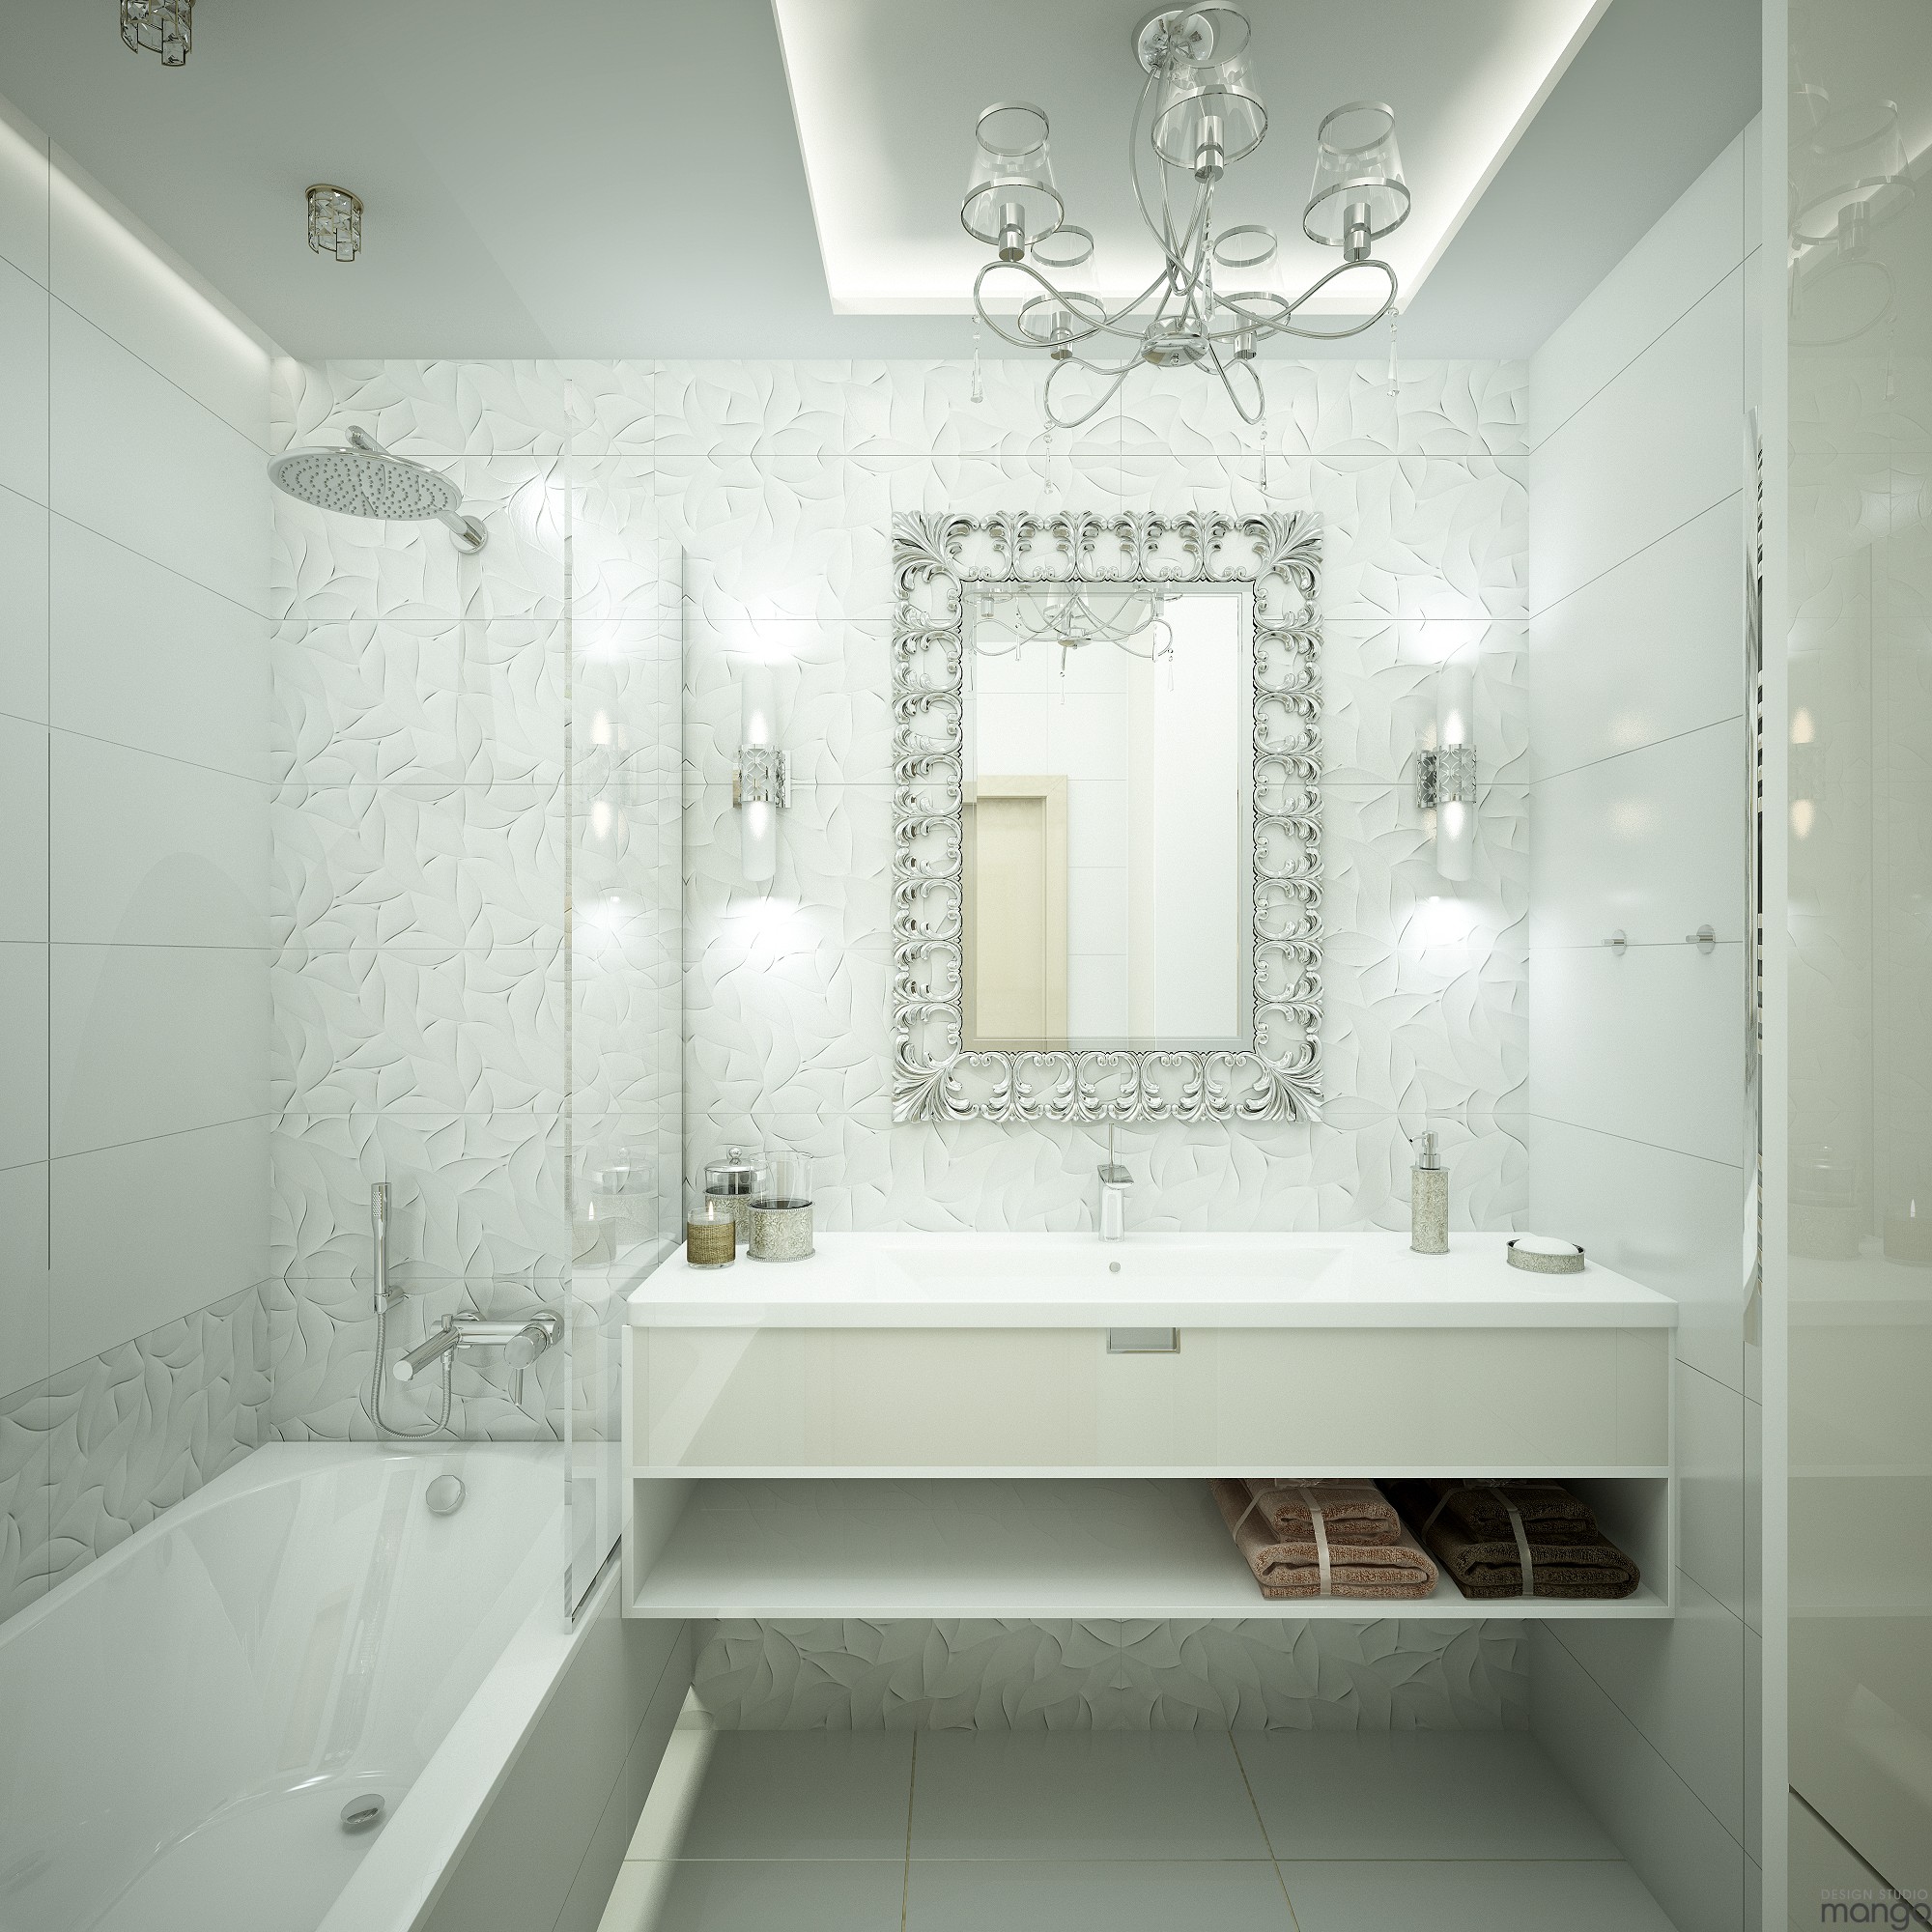 white contemporary bathroom decoration "width =" 2000 "height =" 2000 "srcset =" https://mileray.com/wp-content/uploads/2020/05/1588516118_882_Bathroom-Decorating-Ideas-Combine-With-a-Backsplash-Design-Will-Look.jpg 2000w, https: // myfashionos. com / wp-content / uploads / 2016/09 / Design-Studio-Mango11-150x150.jpg 150w, https://mileray.com/wp-content/uploads/2016/09/Design-Studio-Mango11-300x300. jpg 300w, https://mileray.com/wp-content/uploads/2016/09/Design-Studio-Mango11-768x768.jpg 768w, https://mileray.com/wp-content/uploads/2016/09/ Design-Studio-Mango11-1024x1024.jpg 1024w, https://mileray.com/wp-content/uploads/2016/09/Design-Studio-Mango11-696x696.jpg 696w, https://mileray.com/wp- content / uploads / 2016/09 / Design-Studio-Mango11-1068x1068.jpg 1068w, https://mileray.com/wp-content/uploads/2016/09/Design-Studio-Mango11-420x420.jpg 420w "sizes = "(maximum width: 2000px) 100vw, 2000px